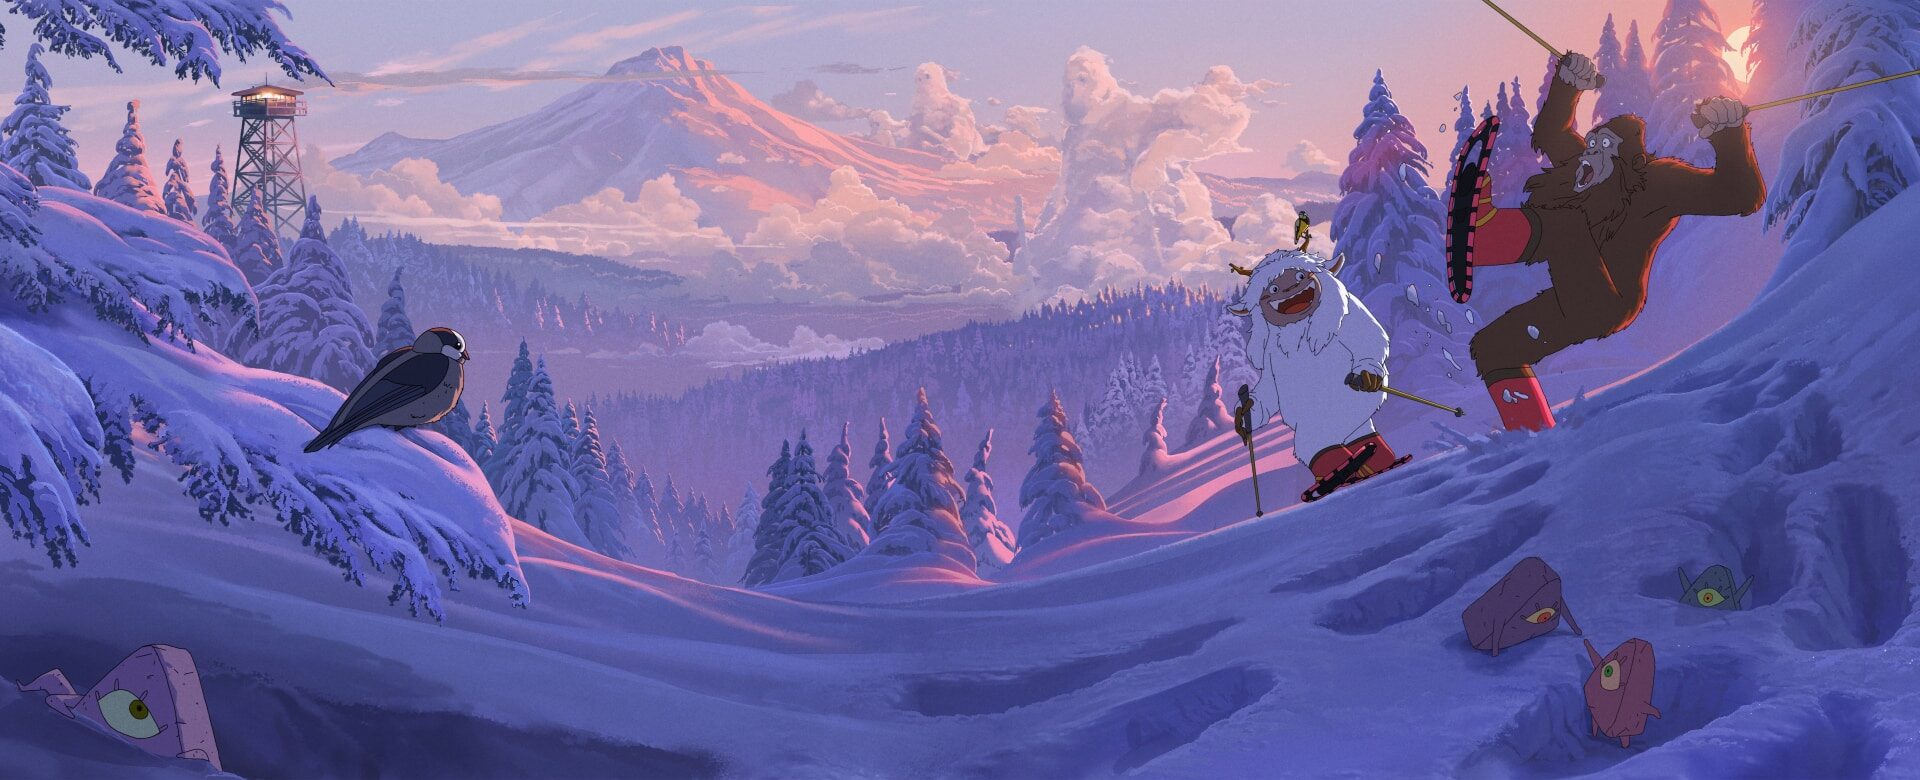 animated Snowshoeing across Oregon's Winter Wonderlands